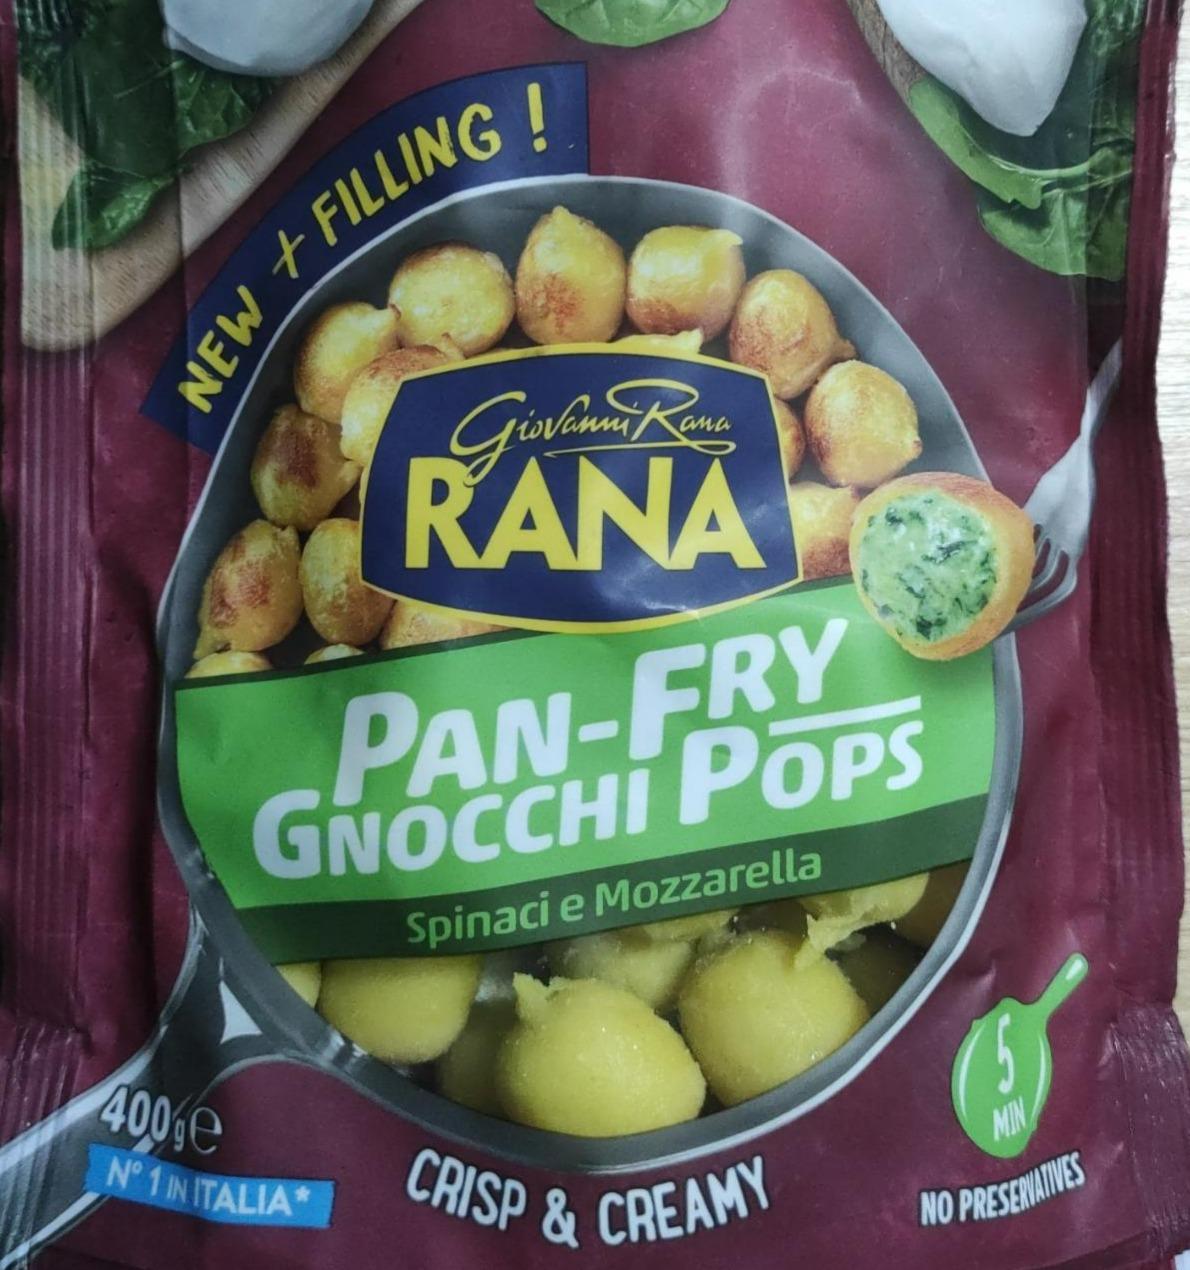 Fotografie - Pan-Fry Gnocchi Pops spinaci e Mozzarella